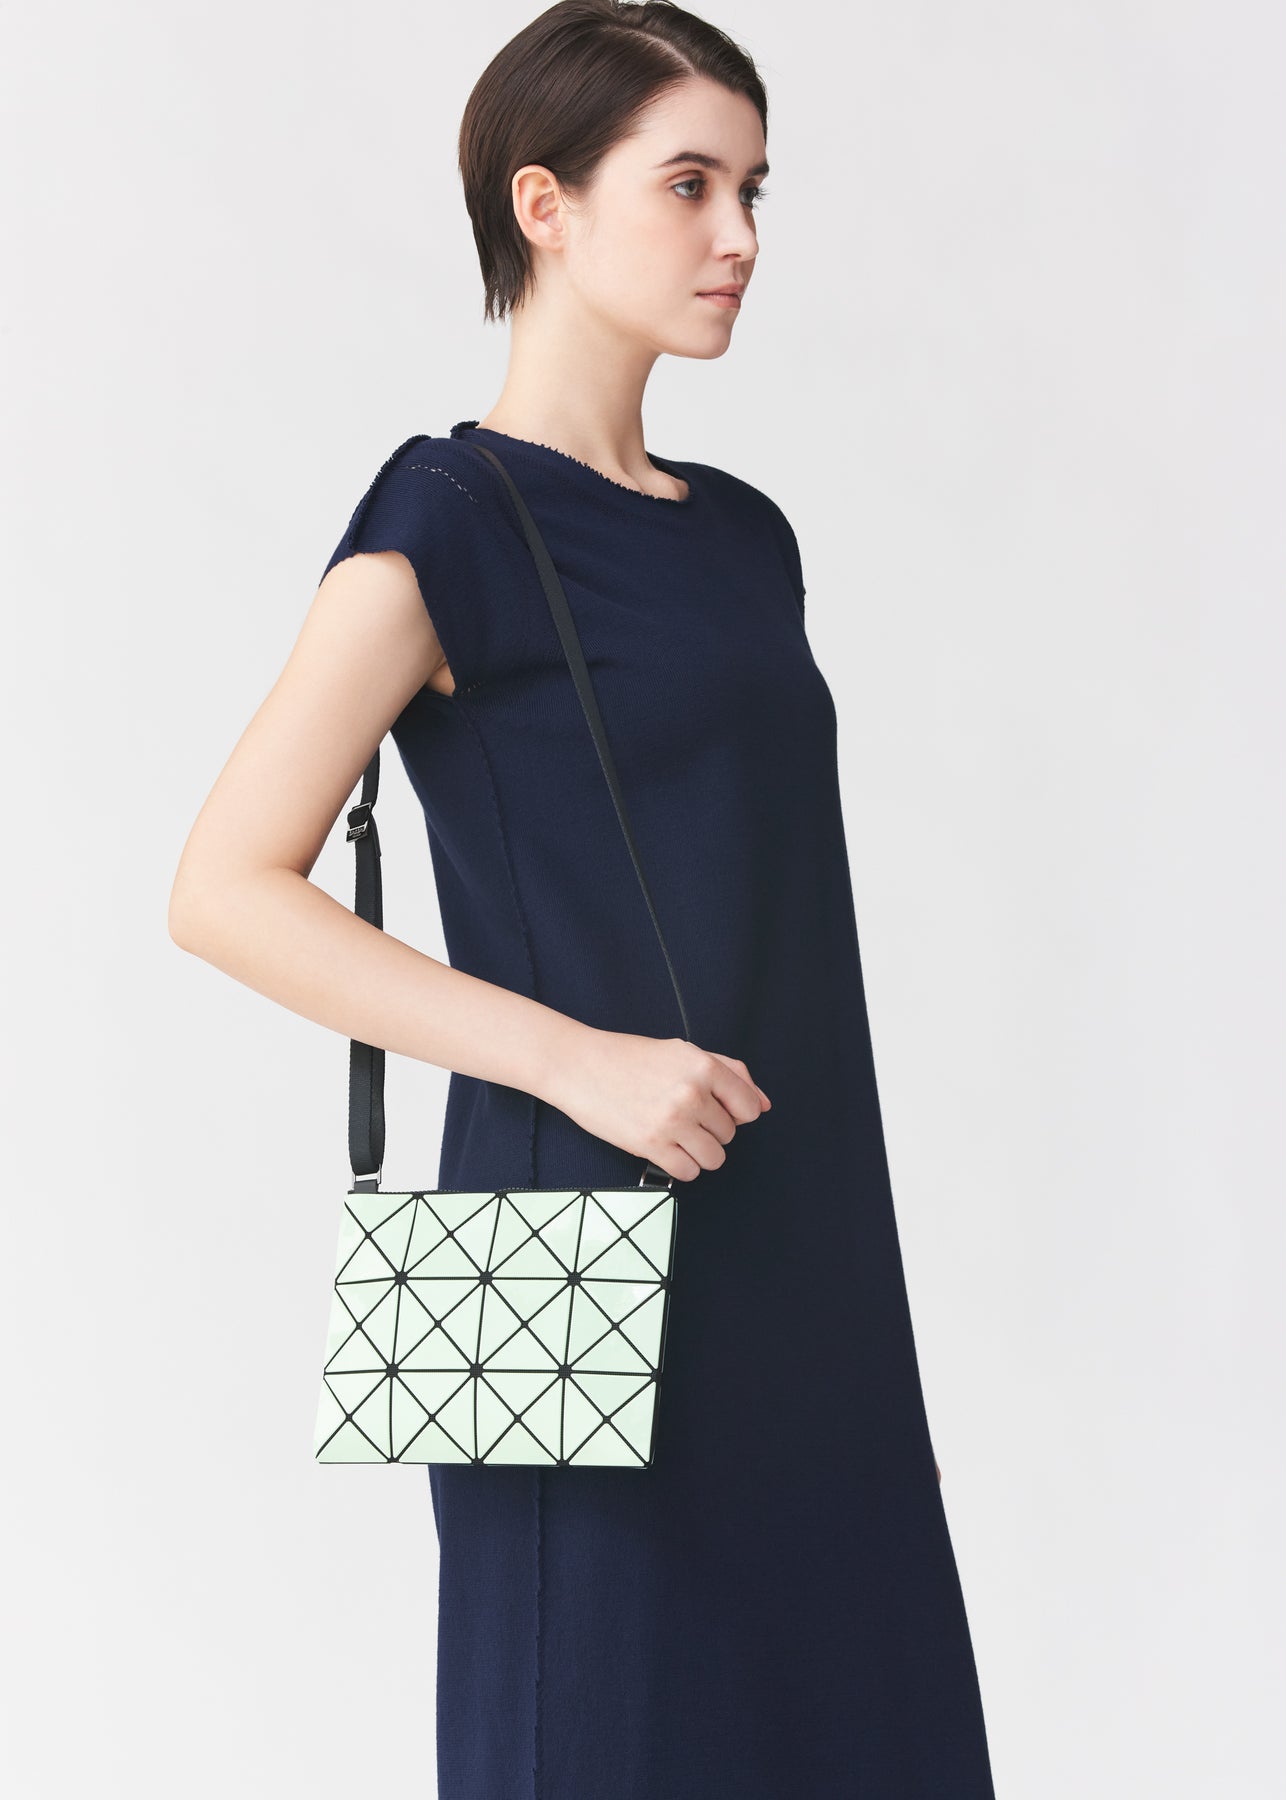 BAO BAO ISSEY MIYAKE Lucent Basic Crossbody Bag – MoMA Design Store